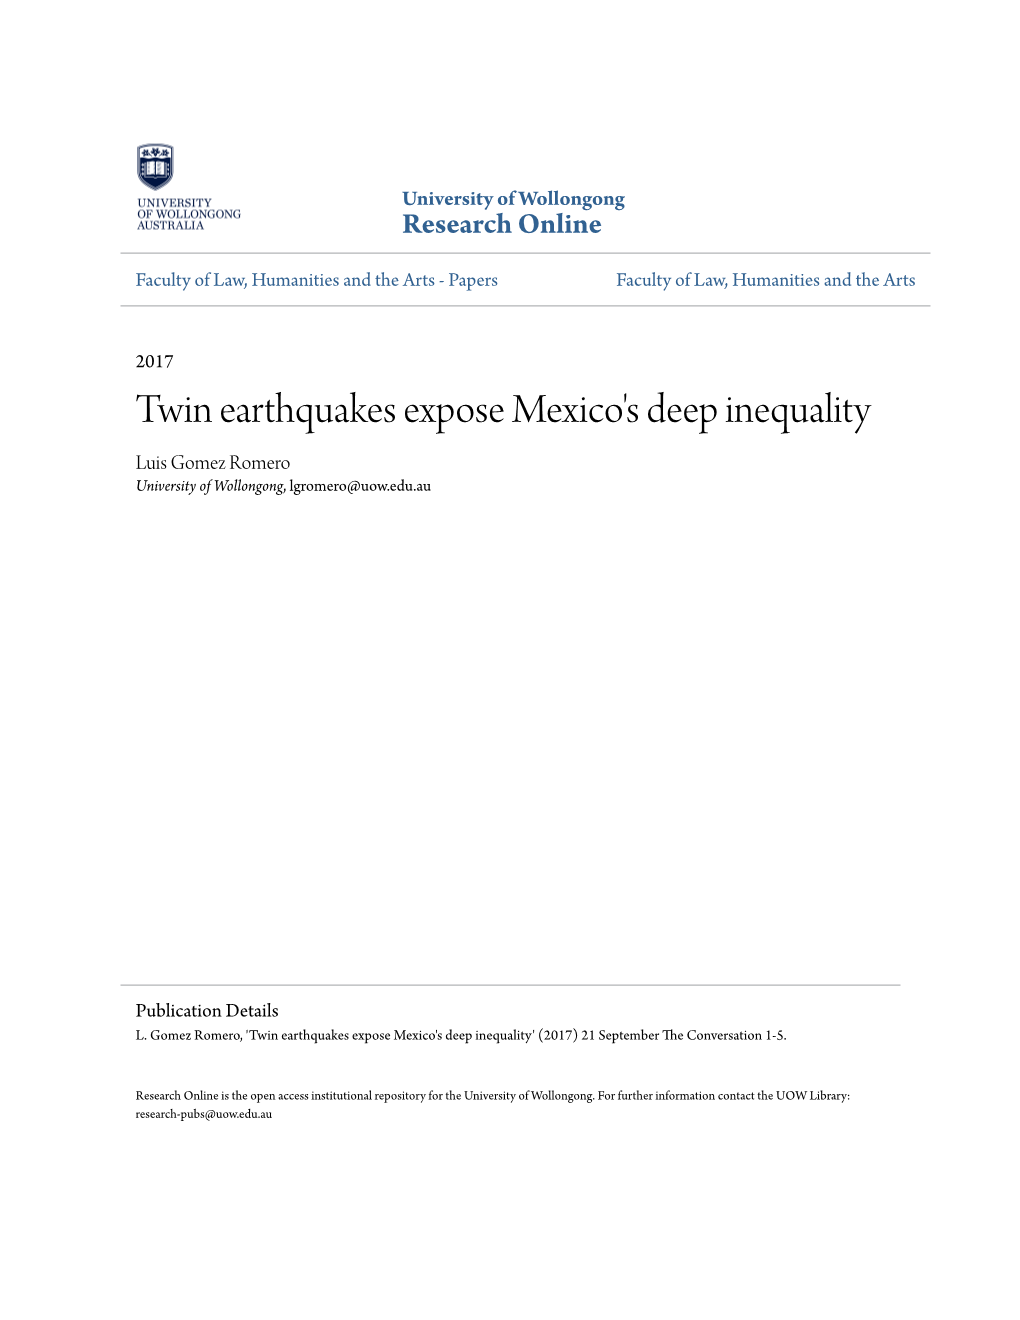 Twin Earthquakes Expose Mexico's Deep Inequality Luis Gomez Romero University of Wollongong, Lgromero@Uow.Edu.Au